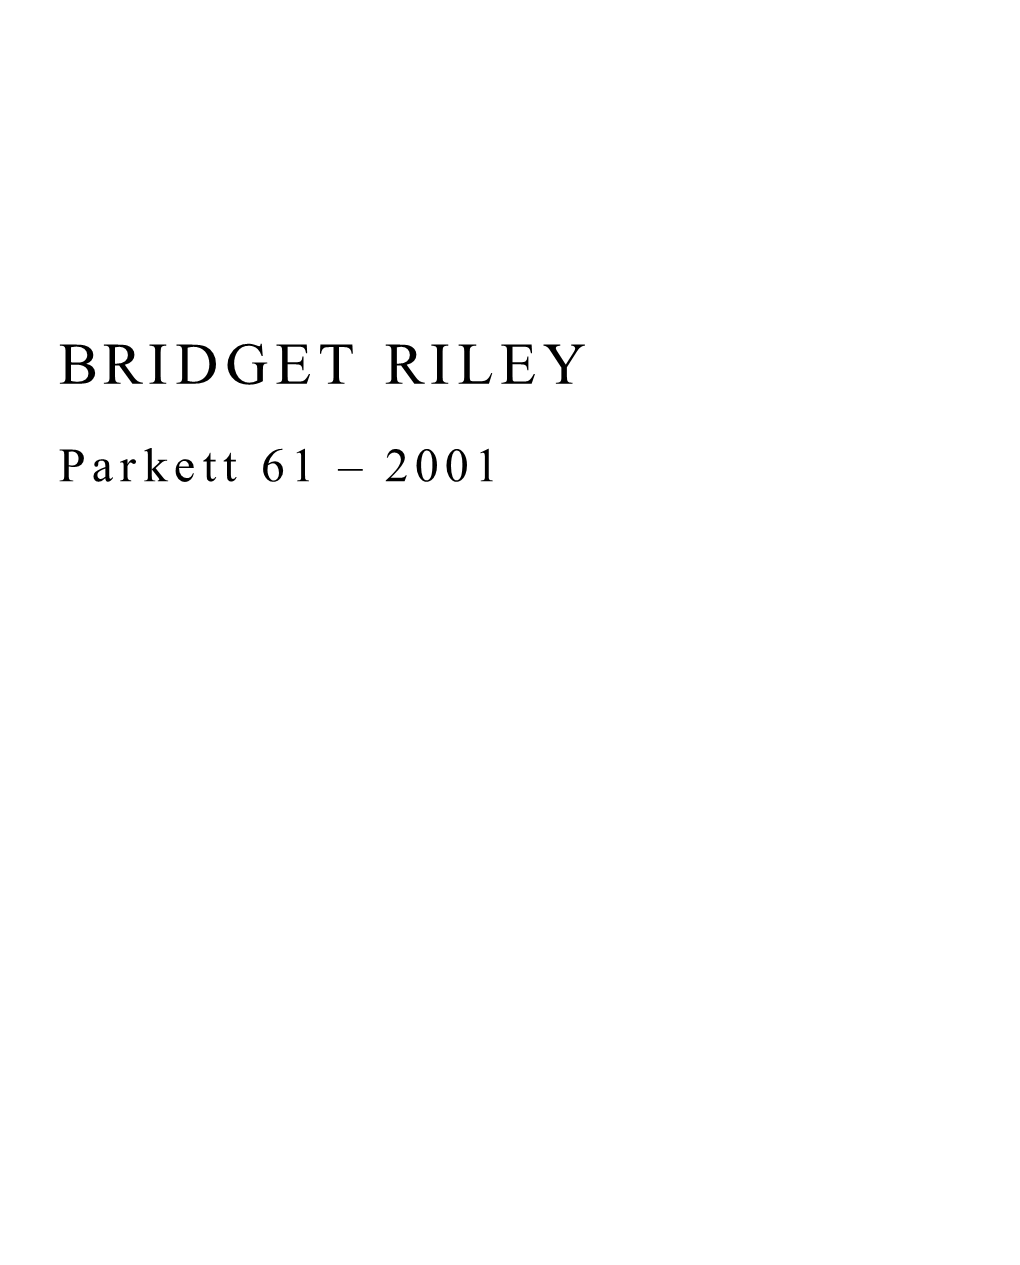 BRIDGET RILEY Parkett 61 – 2001 B Ridget R Iley Supposed to Be Abstract